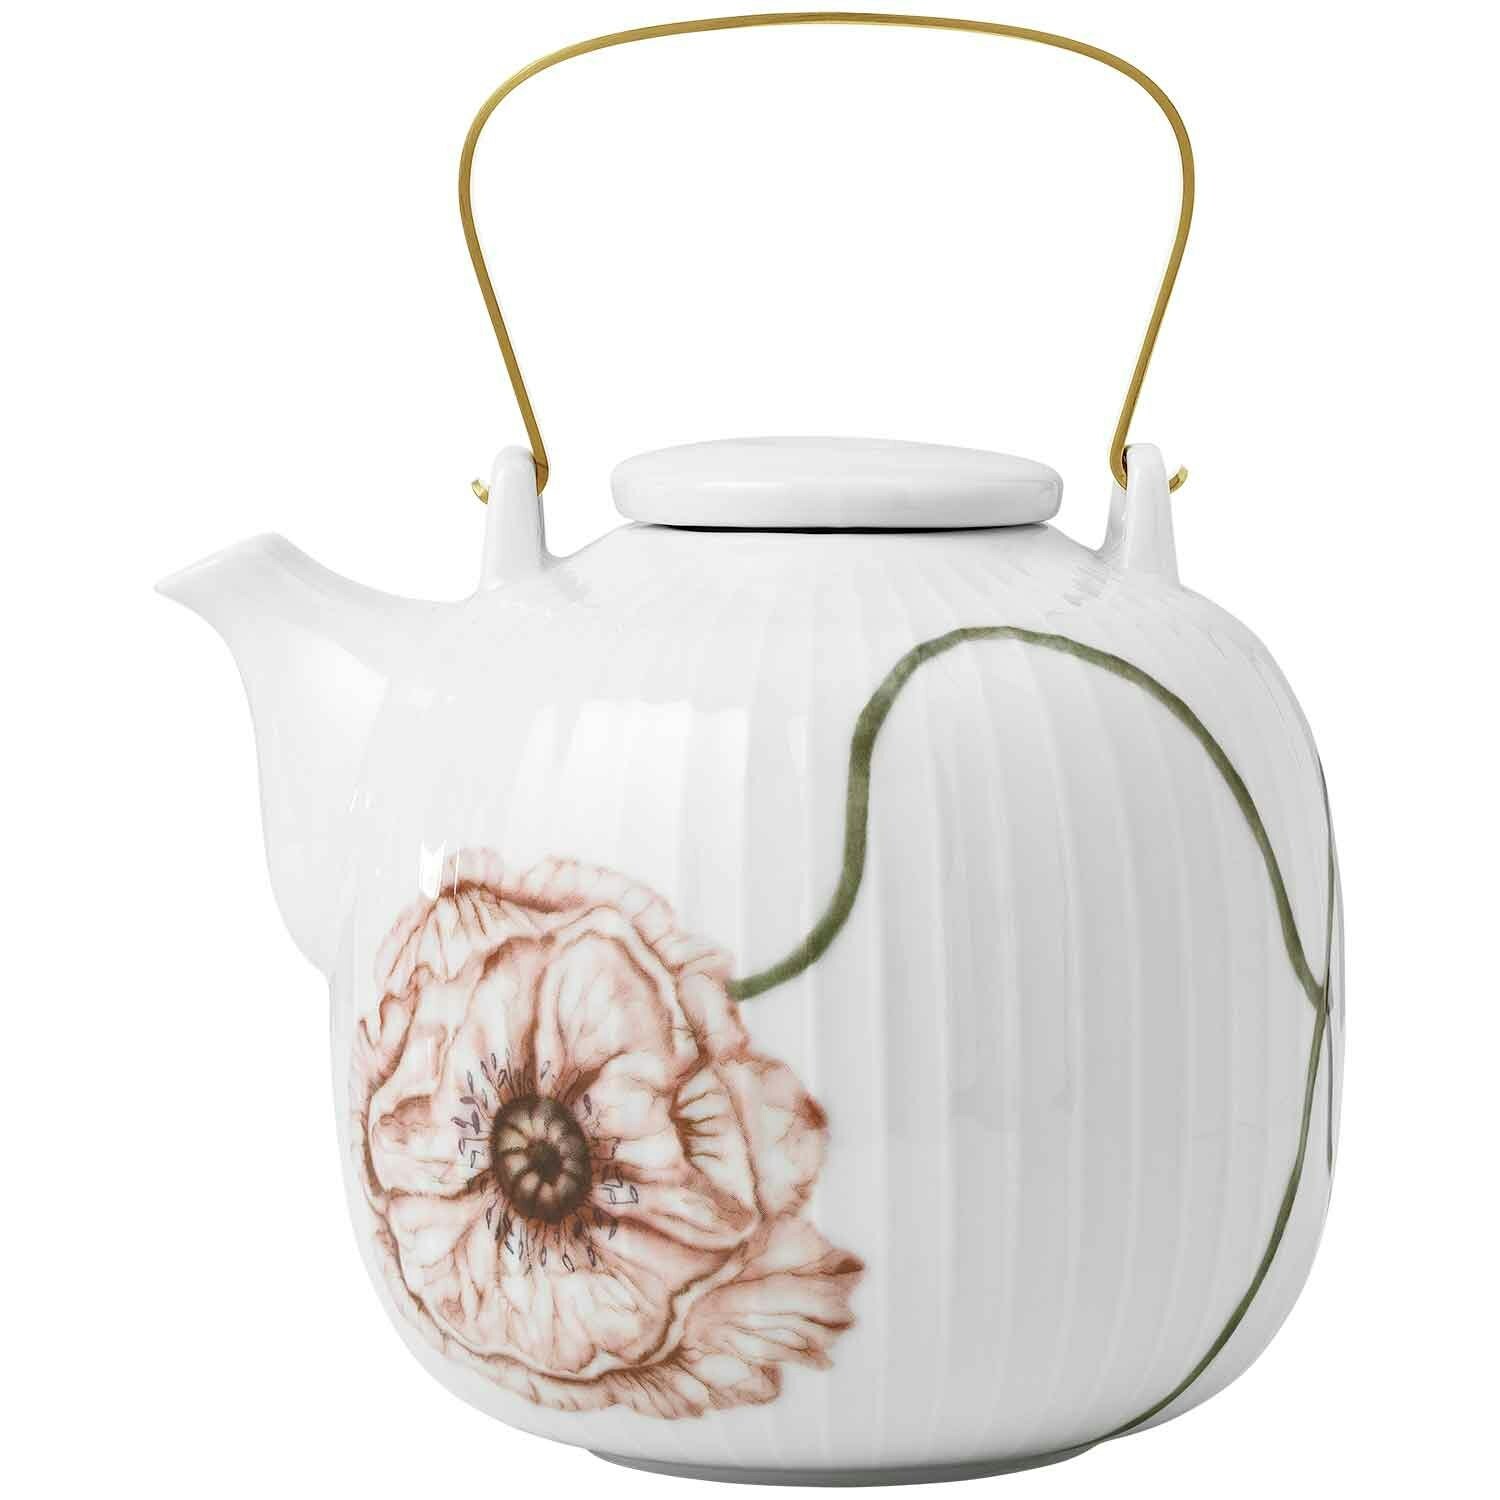 https://royaldesign.com/image/2/kahler-hammershi-poppy-teapot-12-l-0